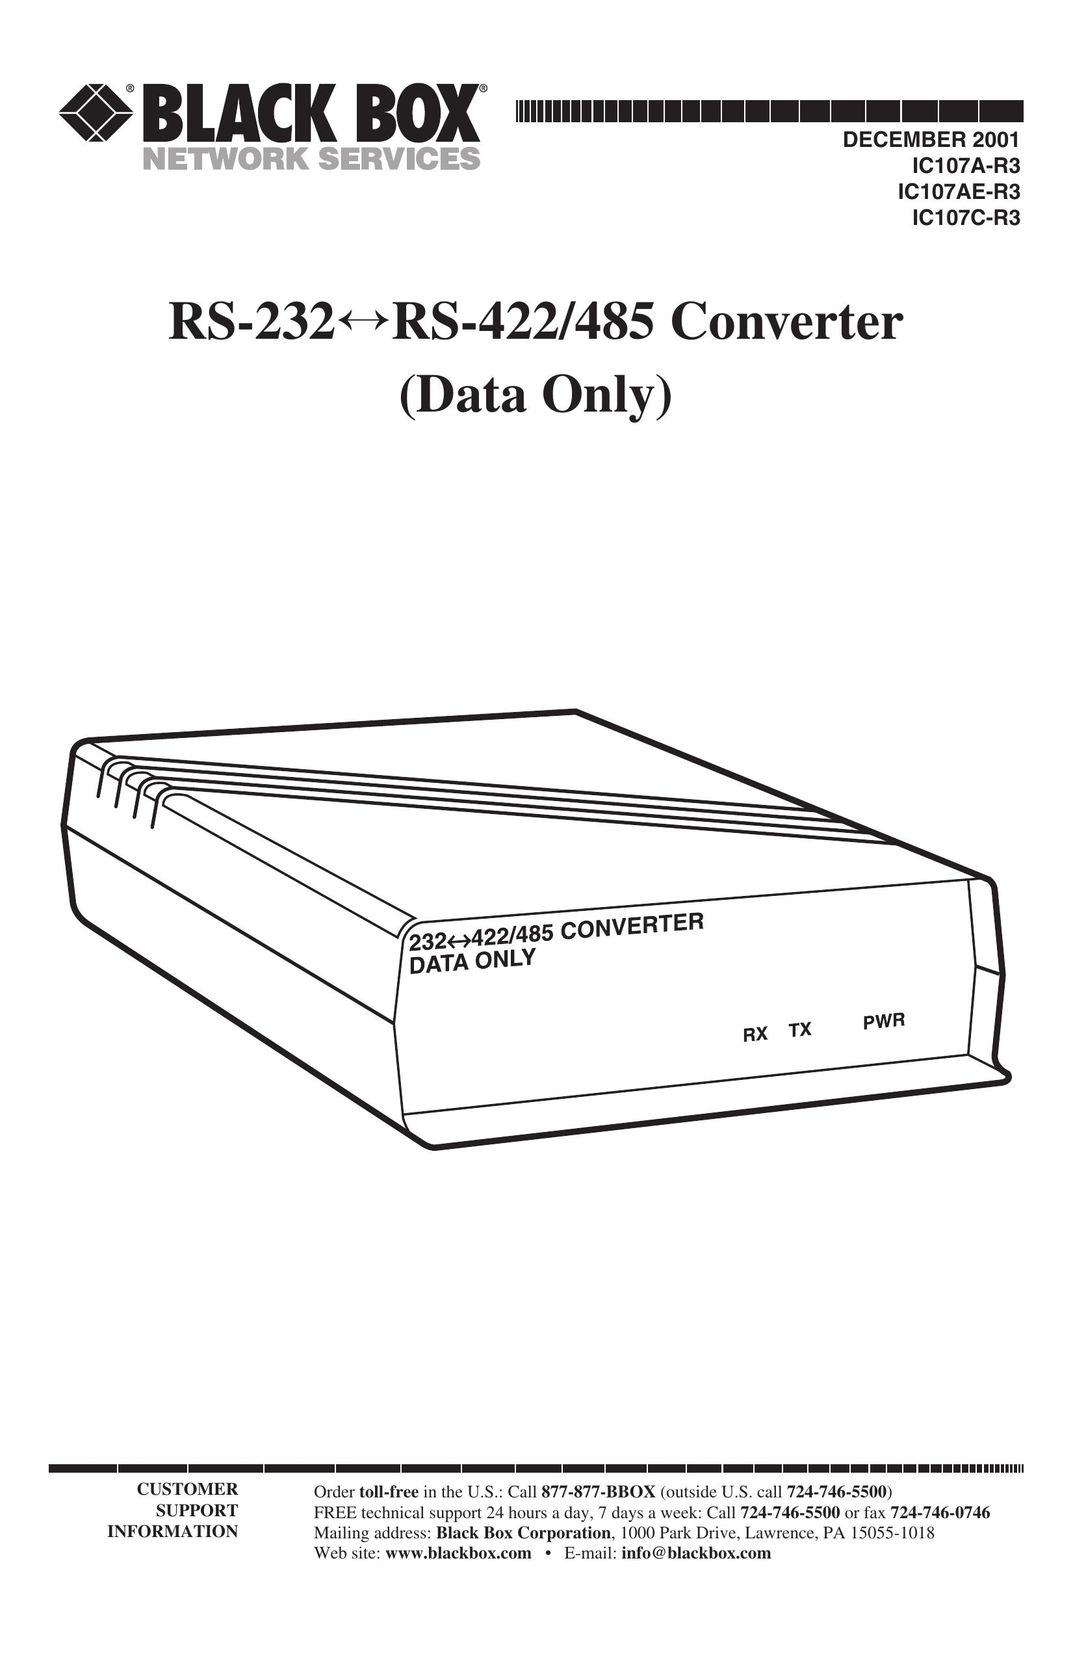 Black Box IC107A-R3 Cable Box User Manual